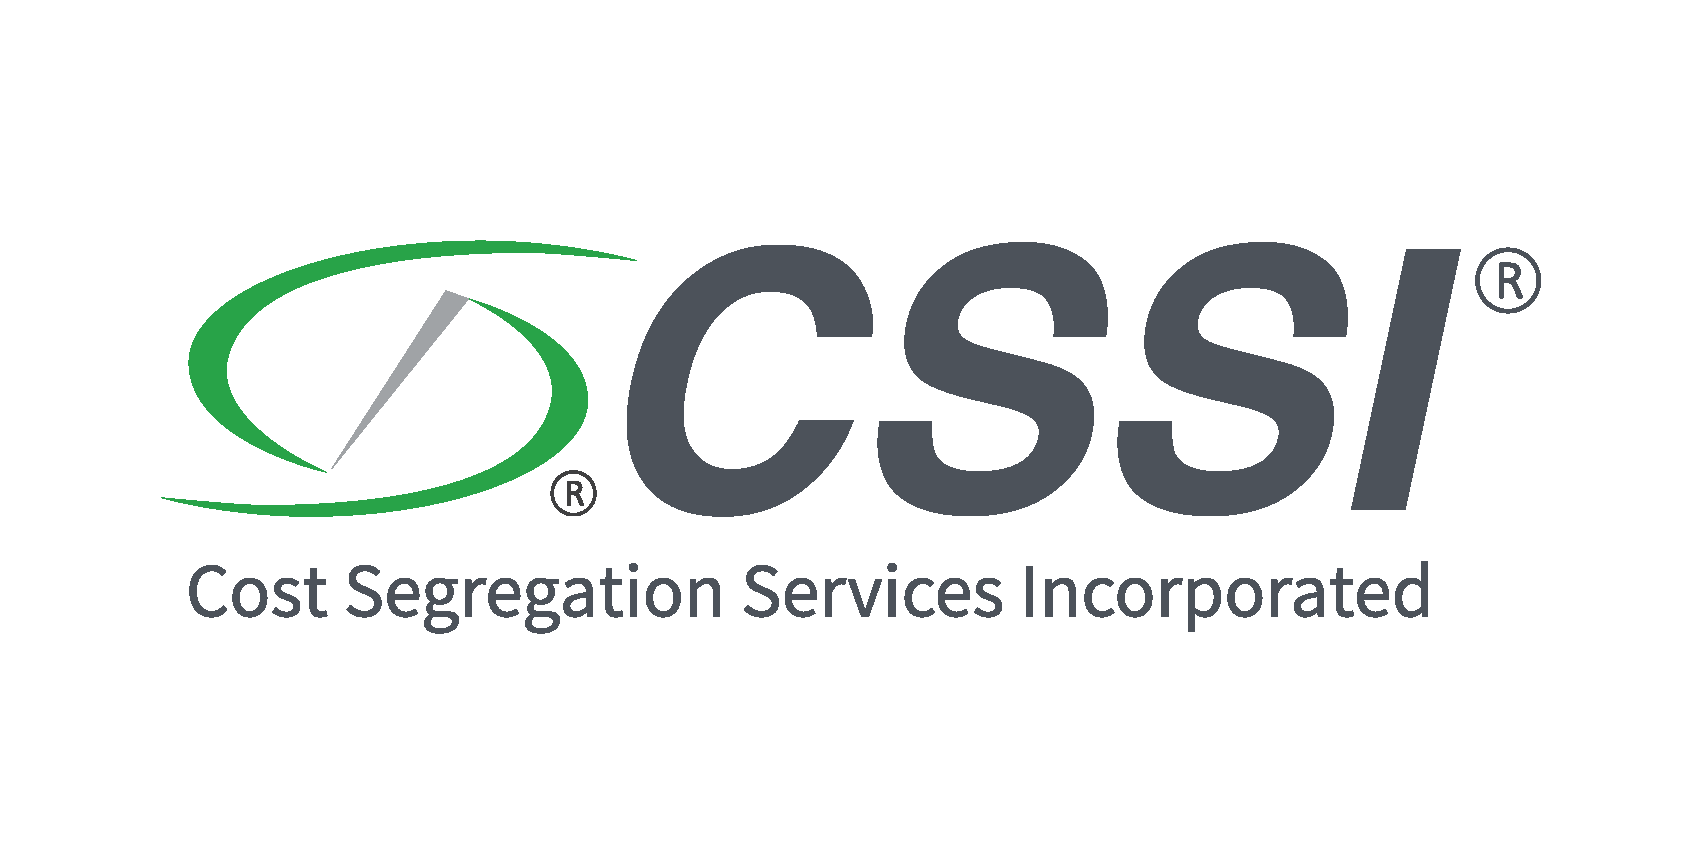 Cost Segregation Services logo